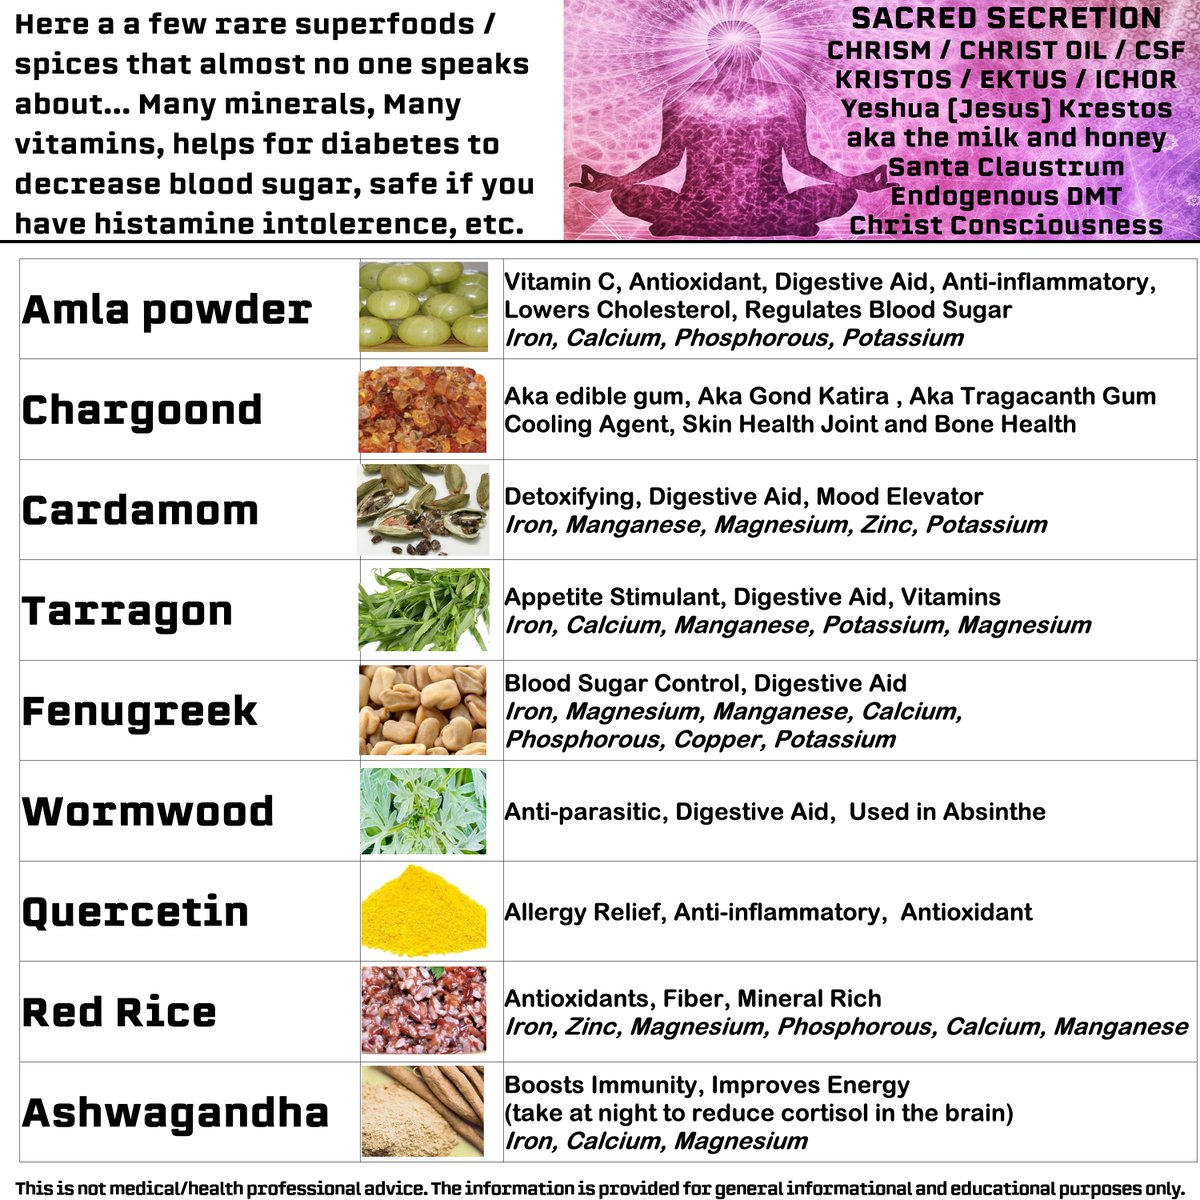 Rare Spices / #superfoods

#spices
#amlapowder
#chargoond
#cardamom
#tarragon
#fenugreek
#wormwood
#quercetin
#redrice
#ashwagandha